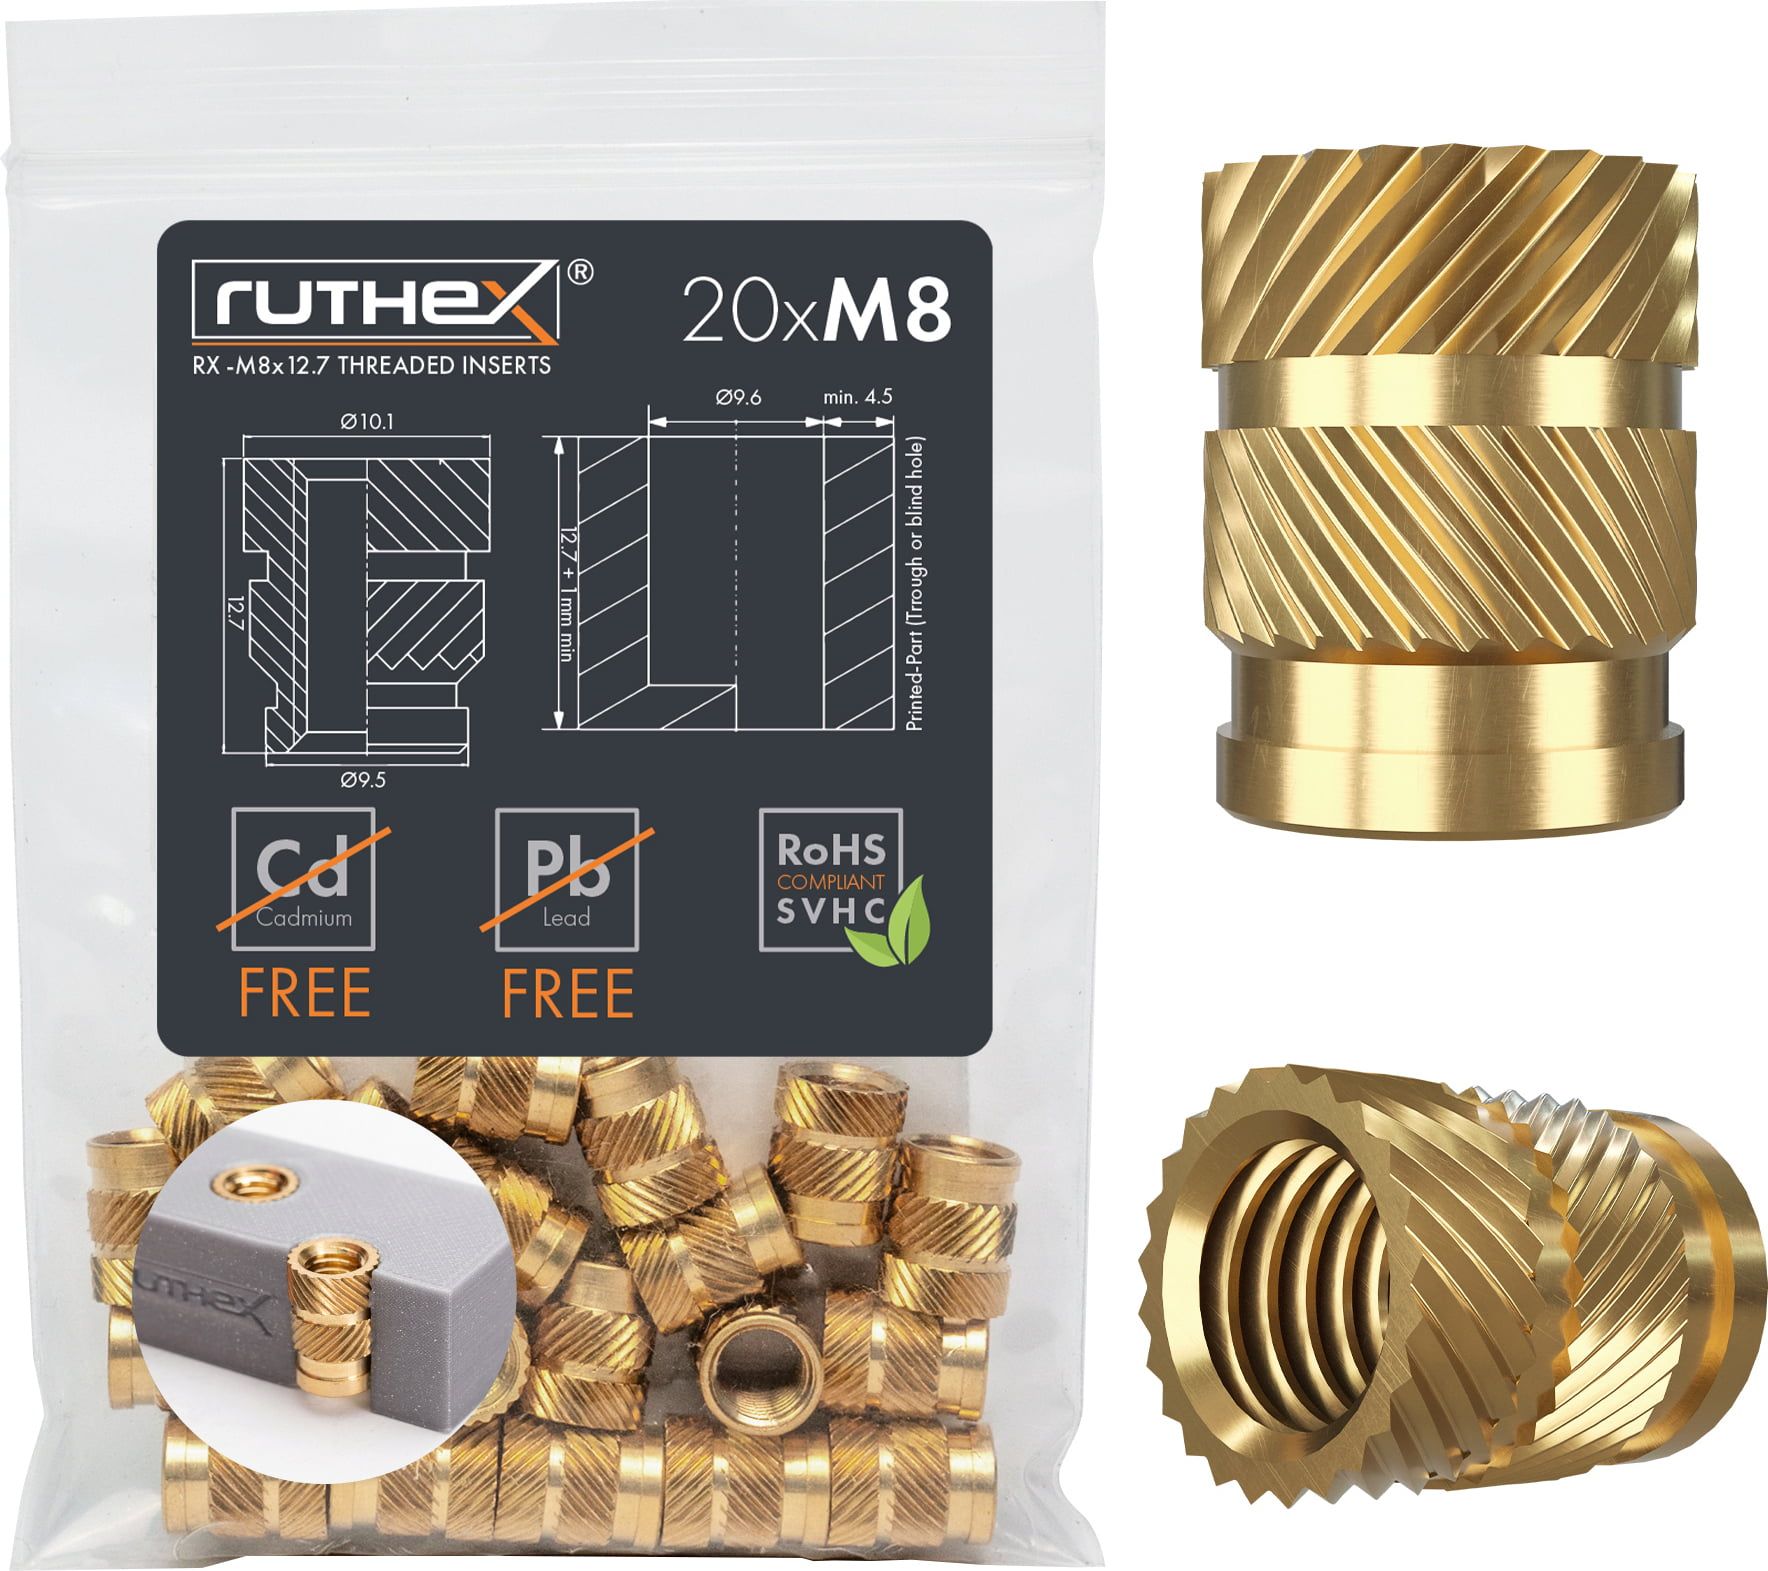 ruthex Threaded Inserts M8 (20 pieces) - 3DJake International